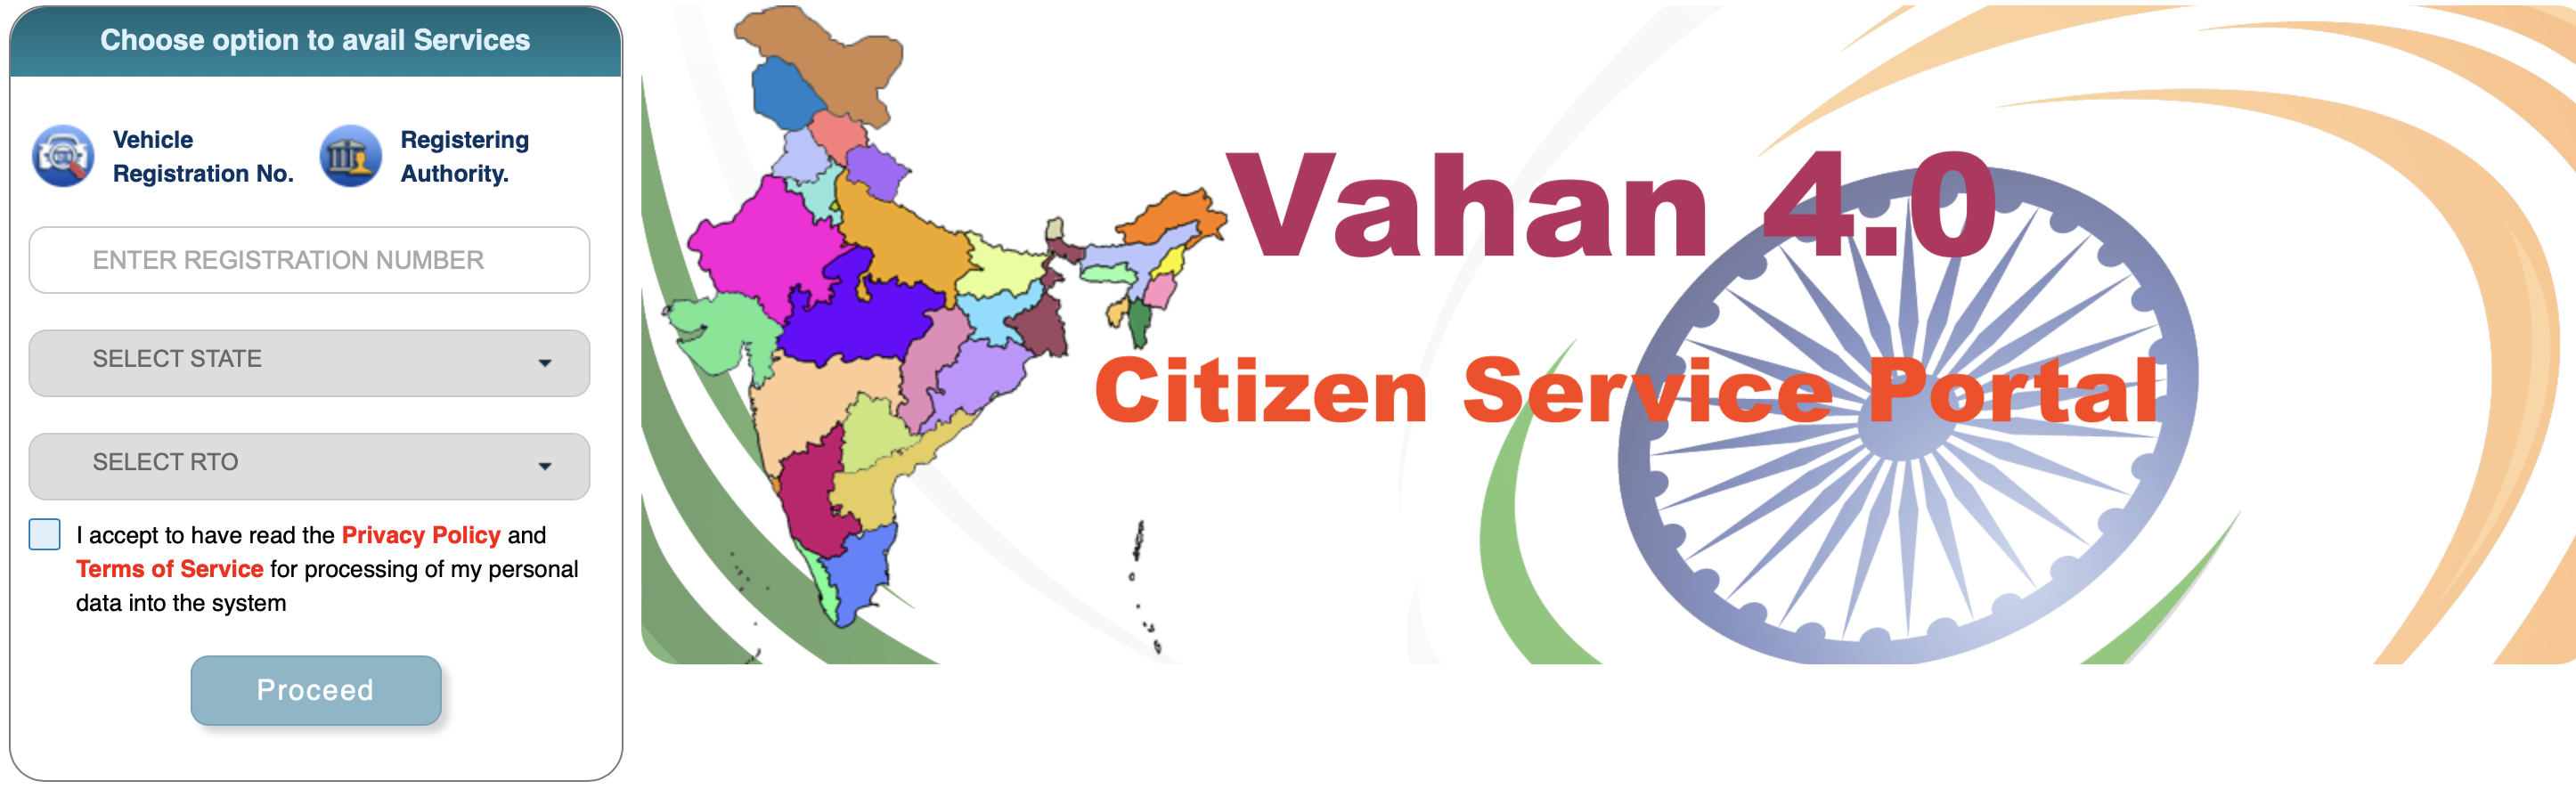 Vahan 4.0 Citizen Services